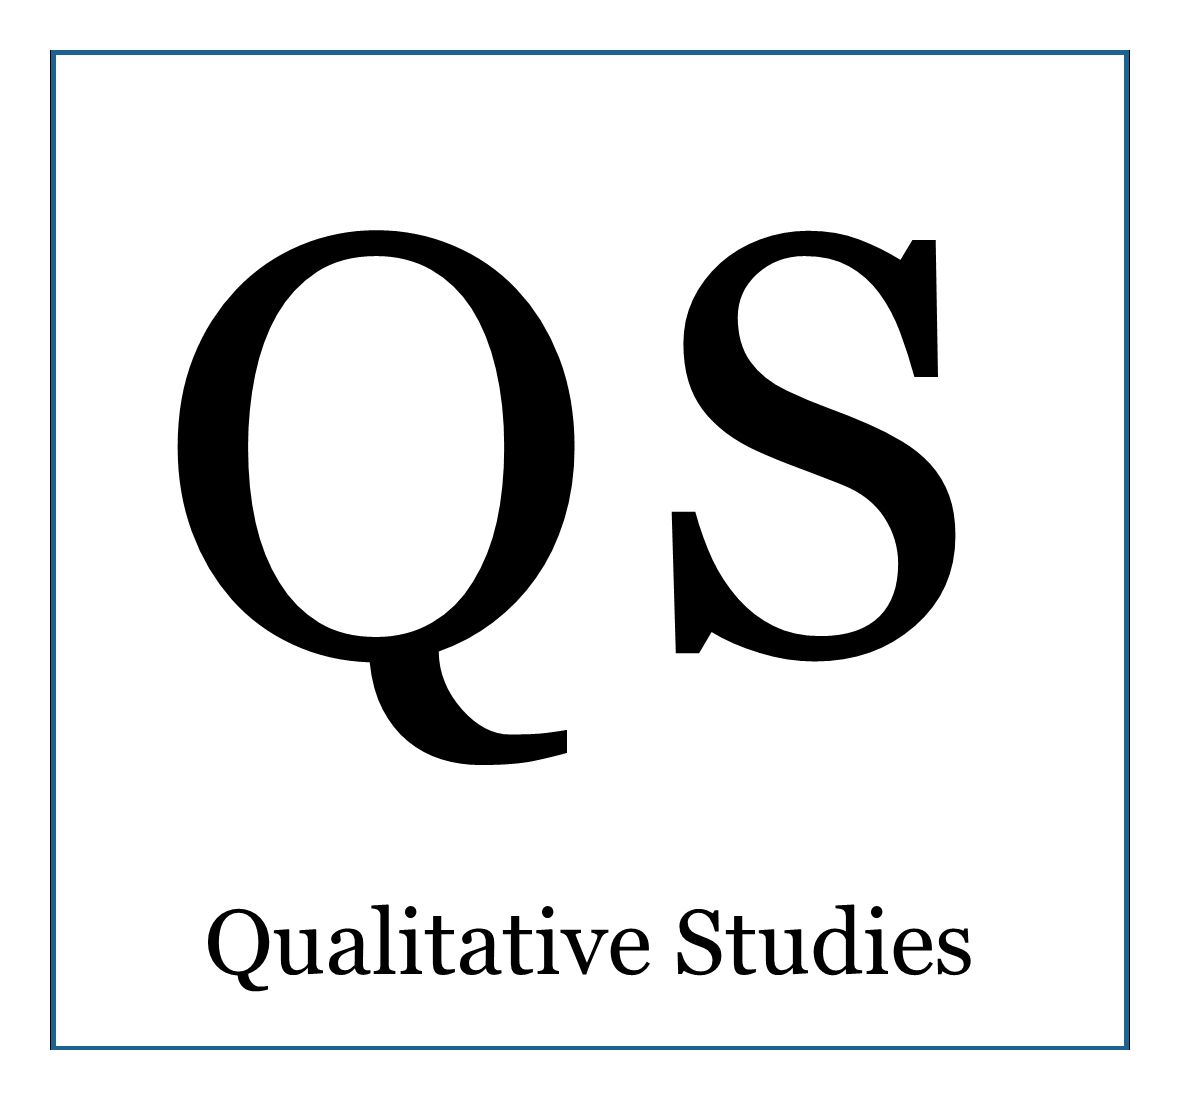 in qualitative research the researcher gains generalizability but loses detail